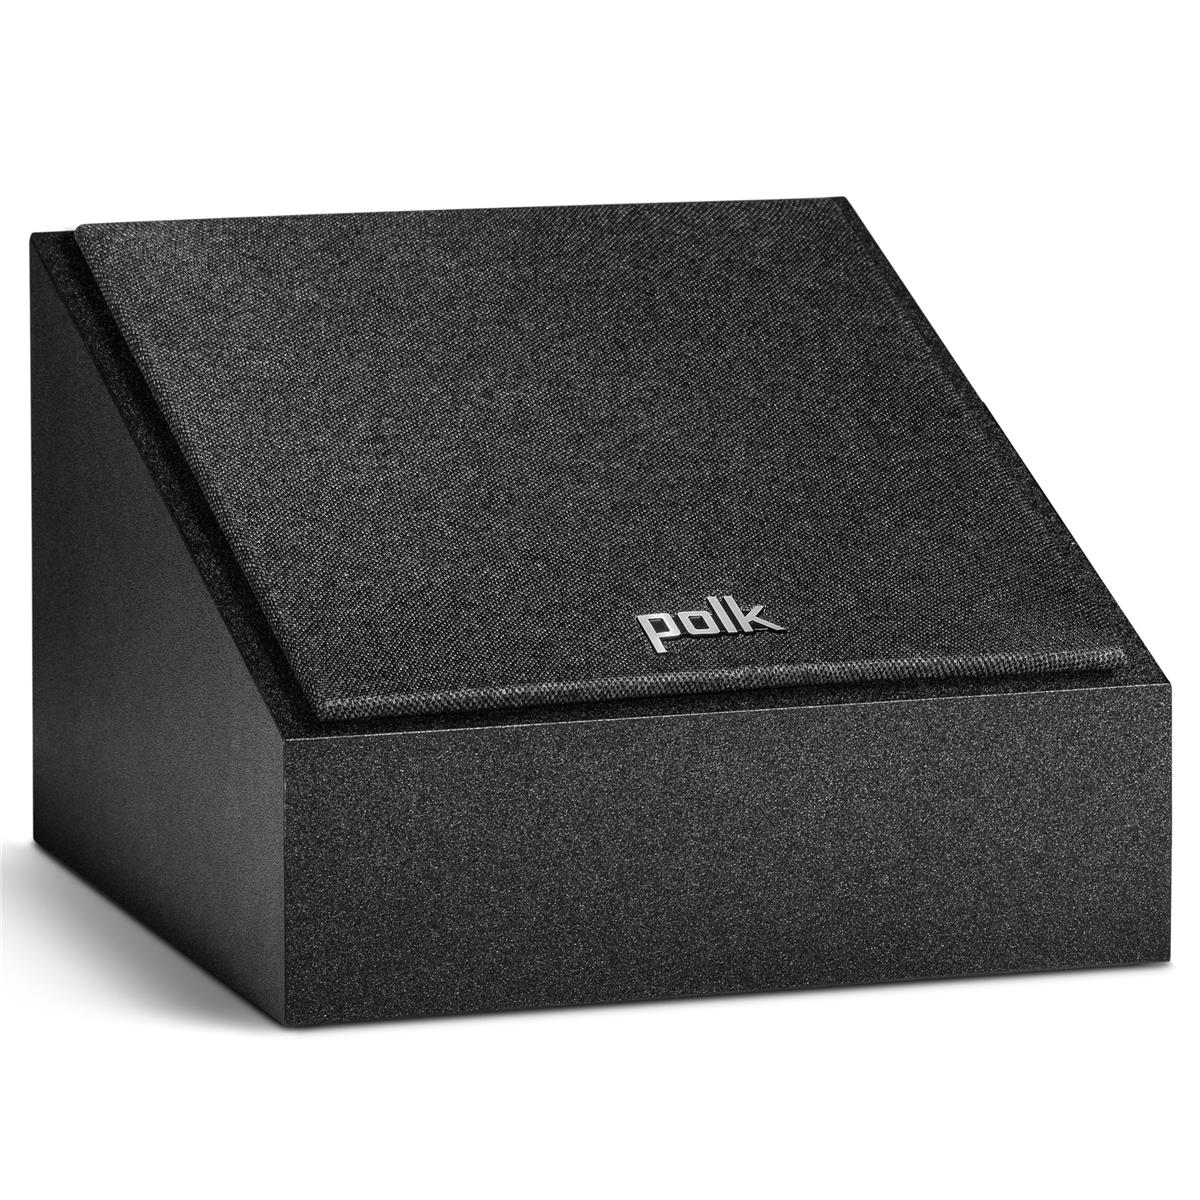 Image of Polk Audio Monitor XT90 Height Speakers